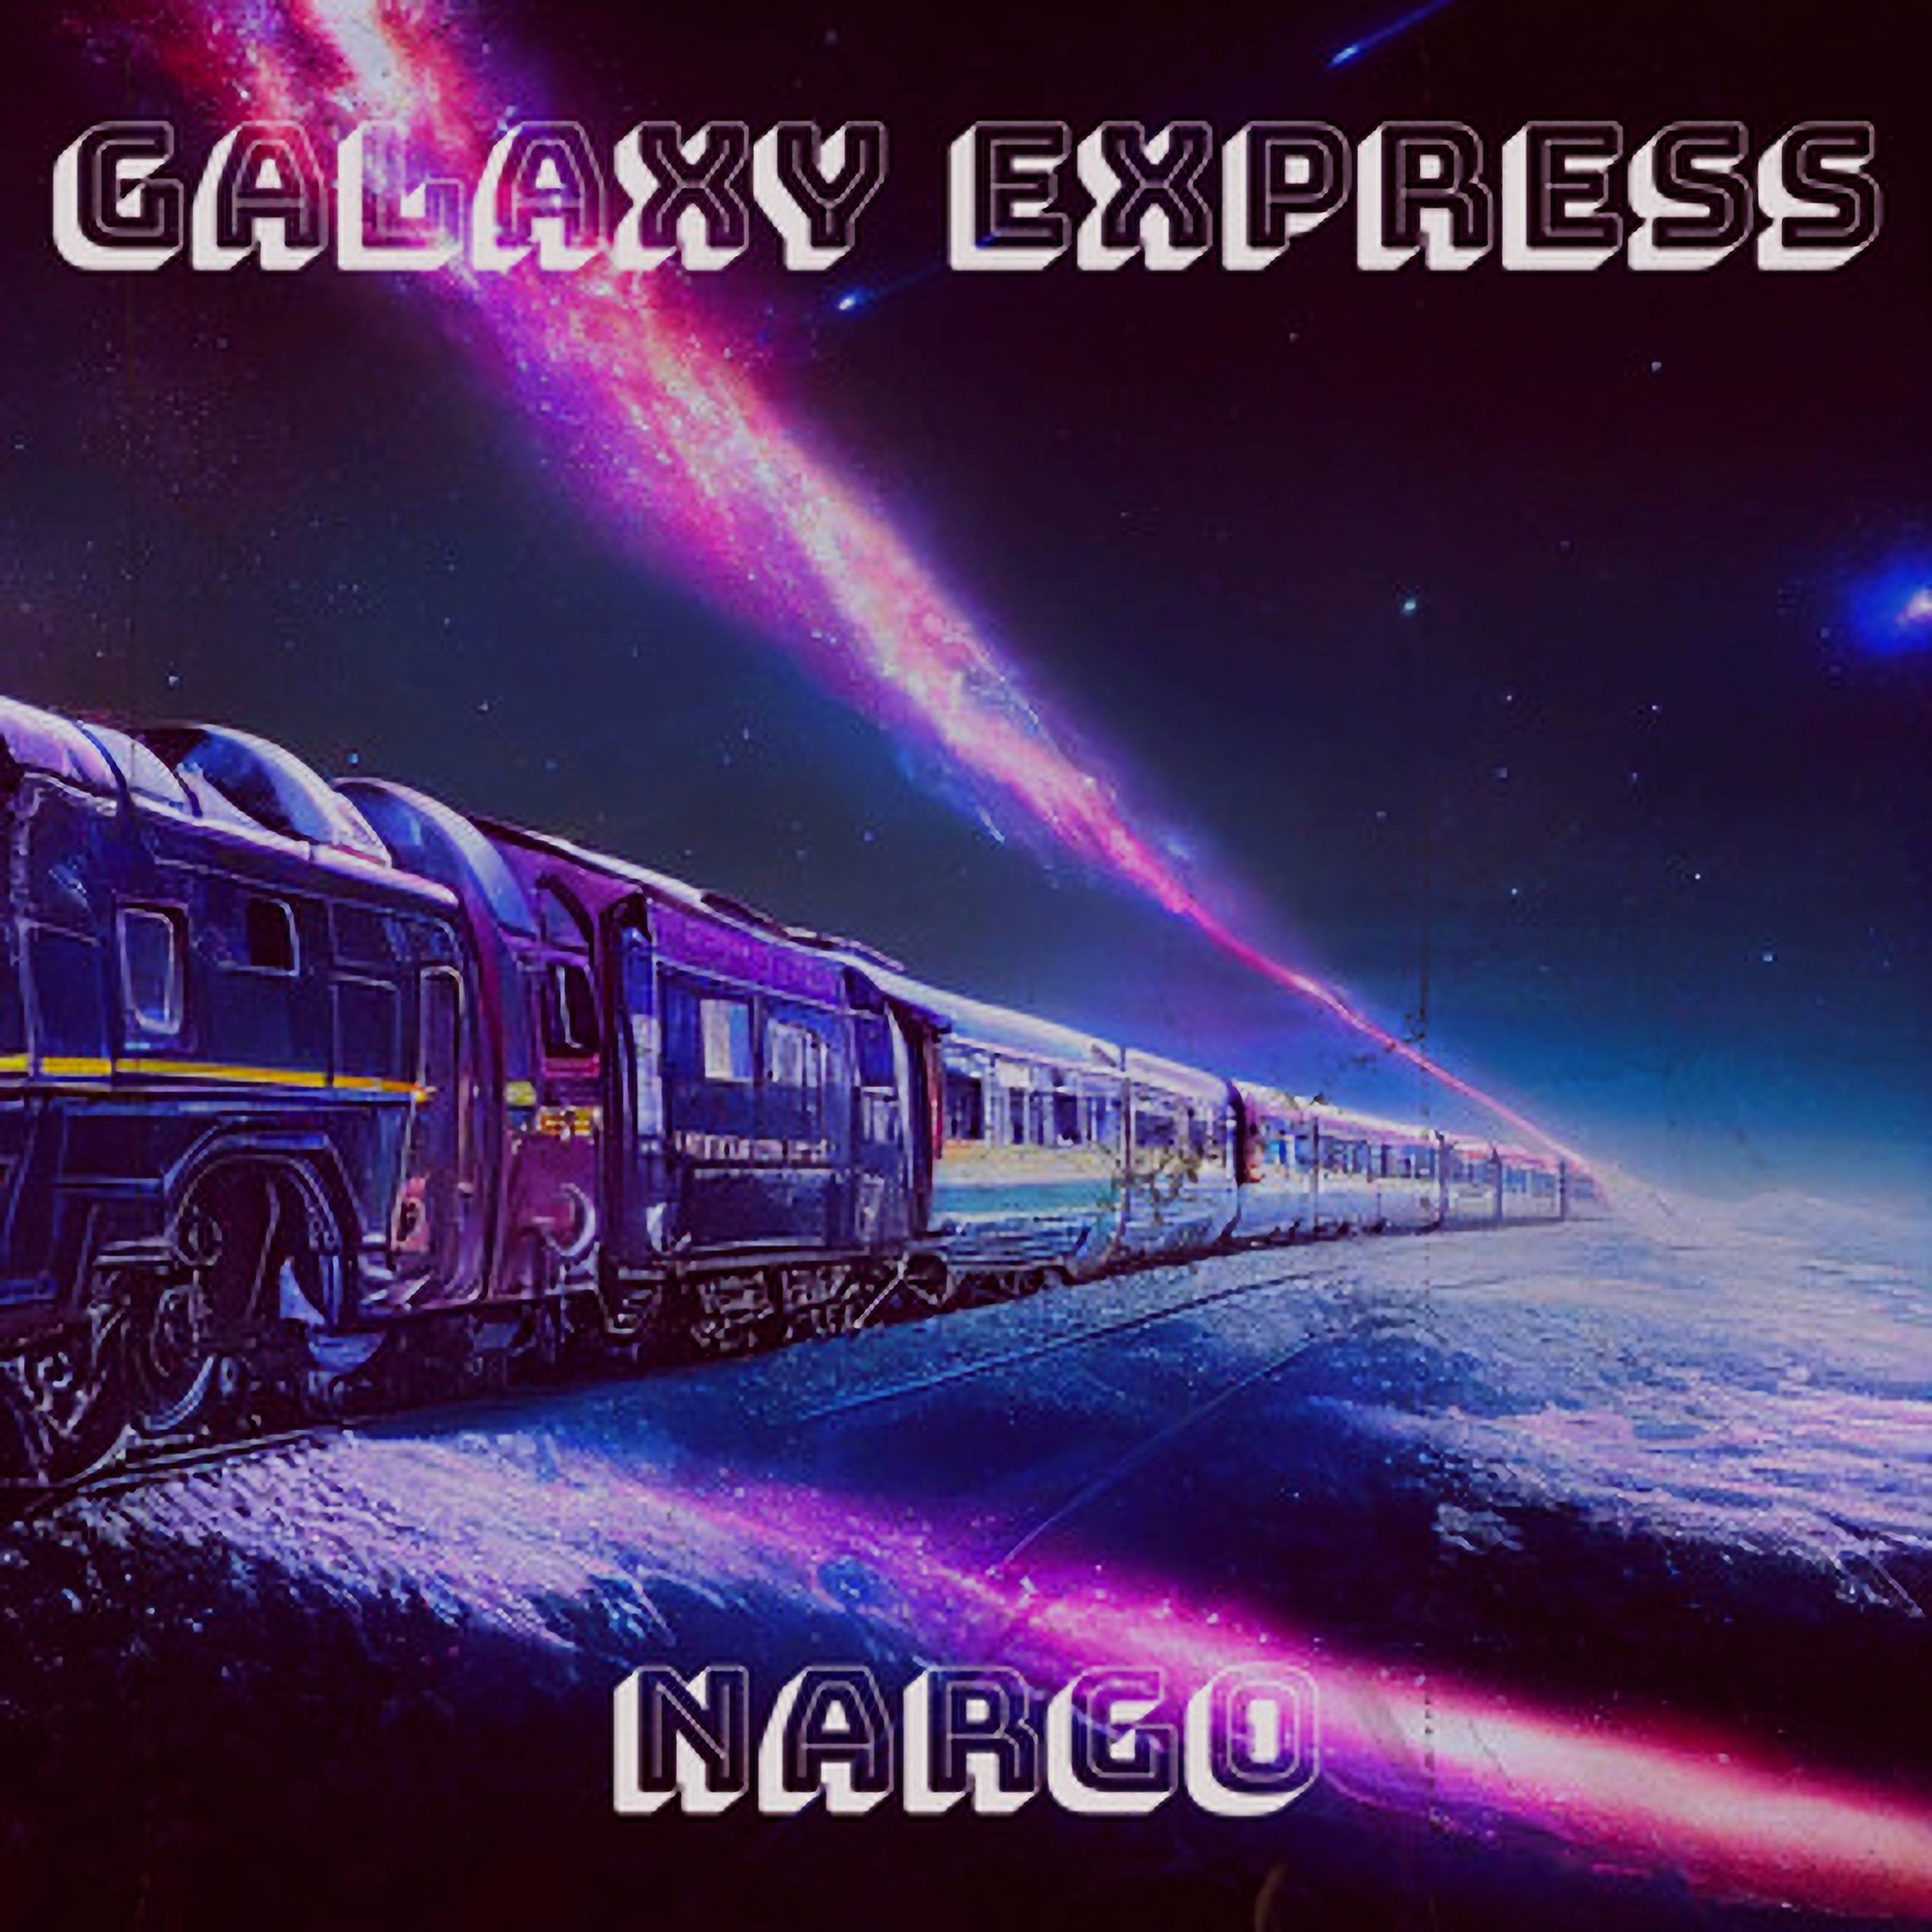 Galaxy Express